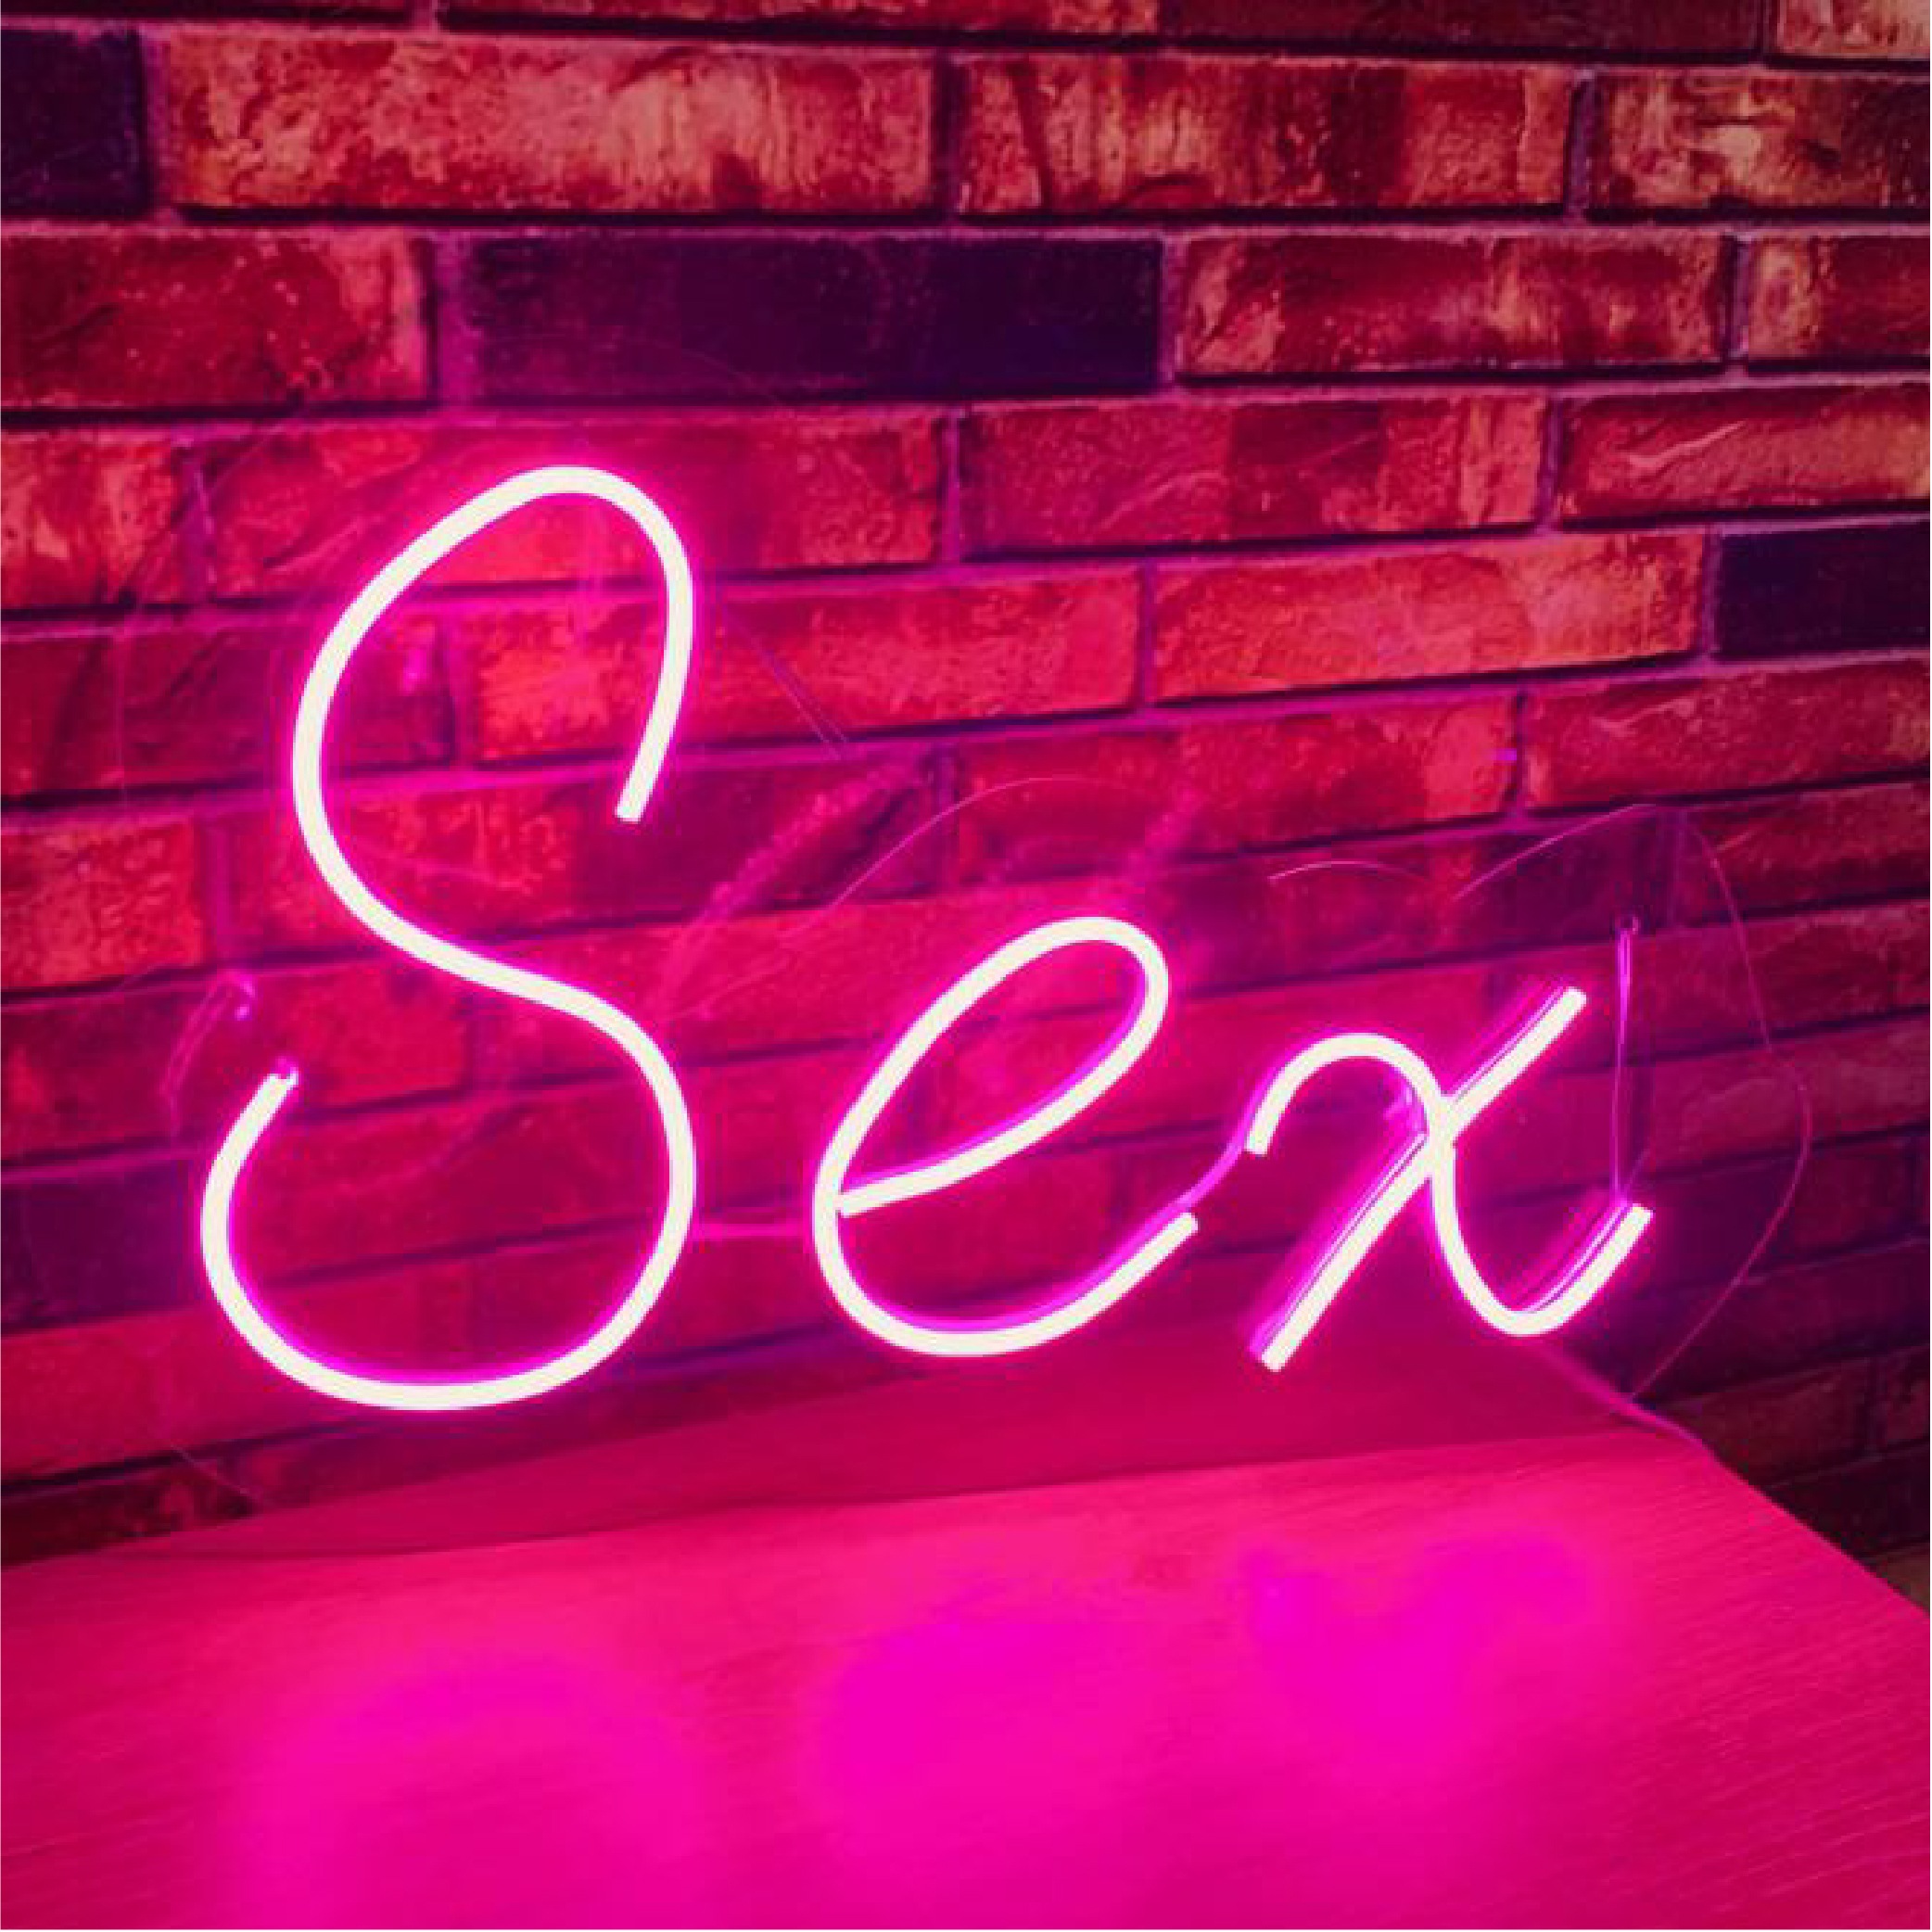 Sex Aviso En Neón Vands Digital Avisos En Acrílico 2204